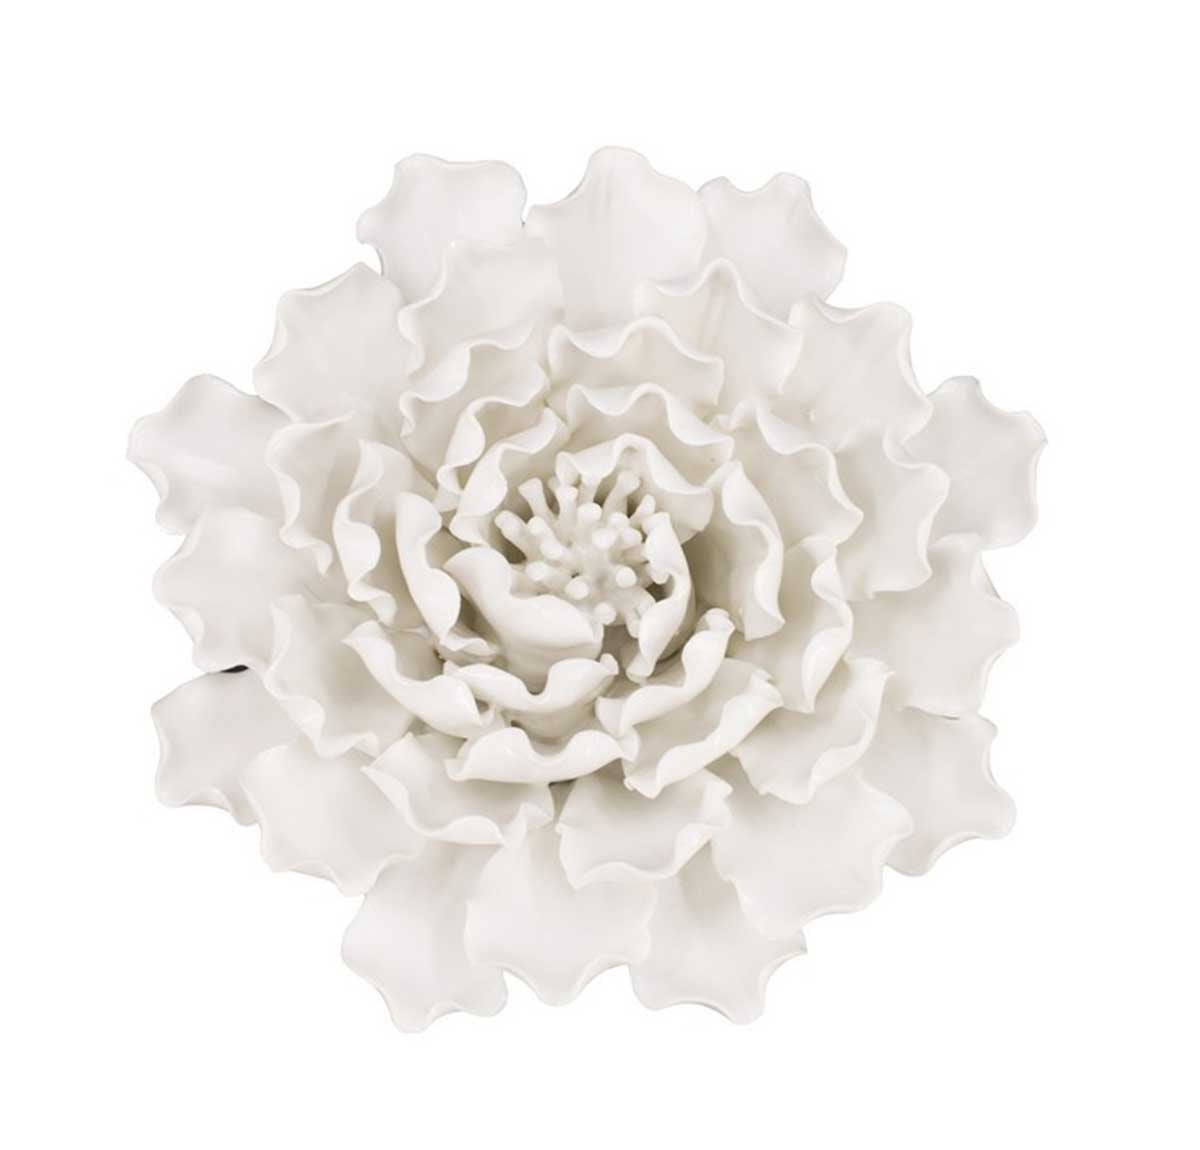 Ceramic 3D Flower Wall Hanging Decor Medium - Cream | Home Decor